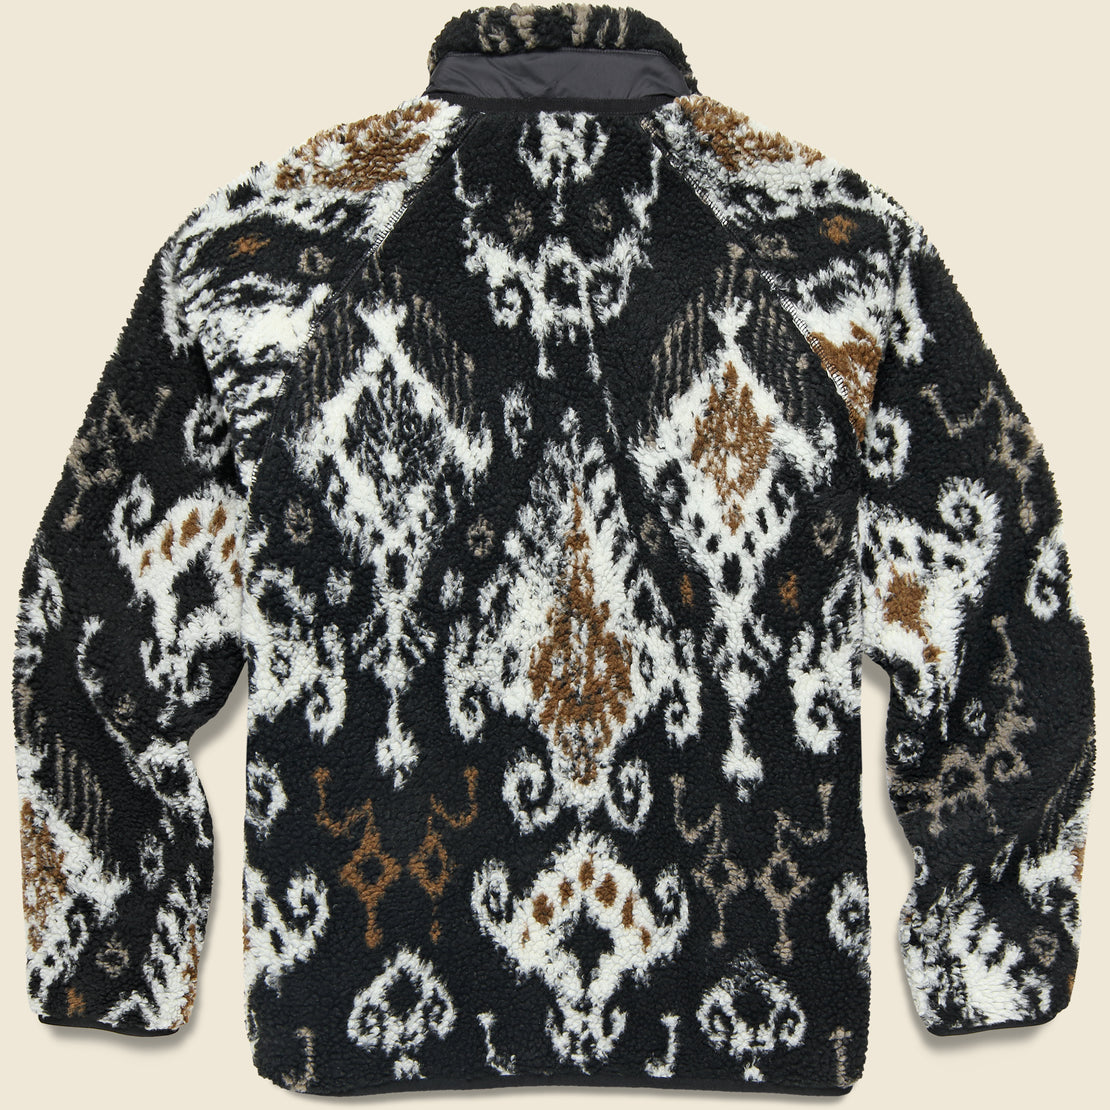 Prentis Liner - Baru Jacquard Black/Black - Carhartt WIP - STAG Provisions - Outerwear - Coat / Jacket